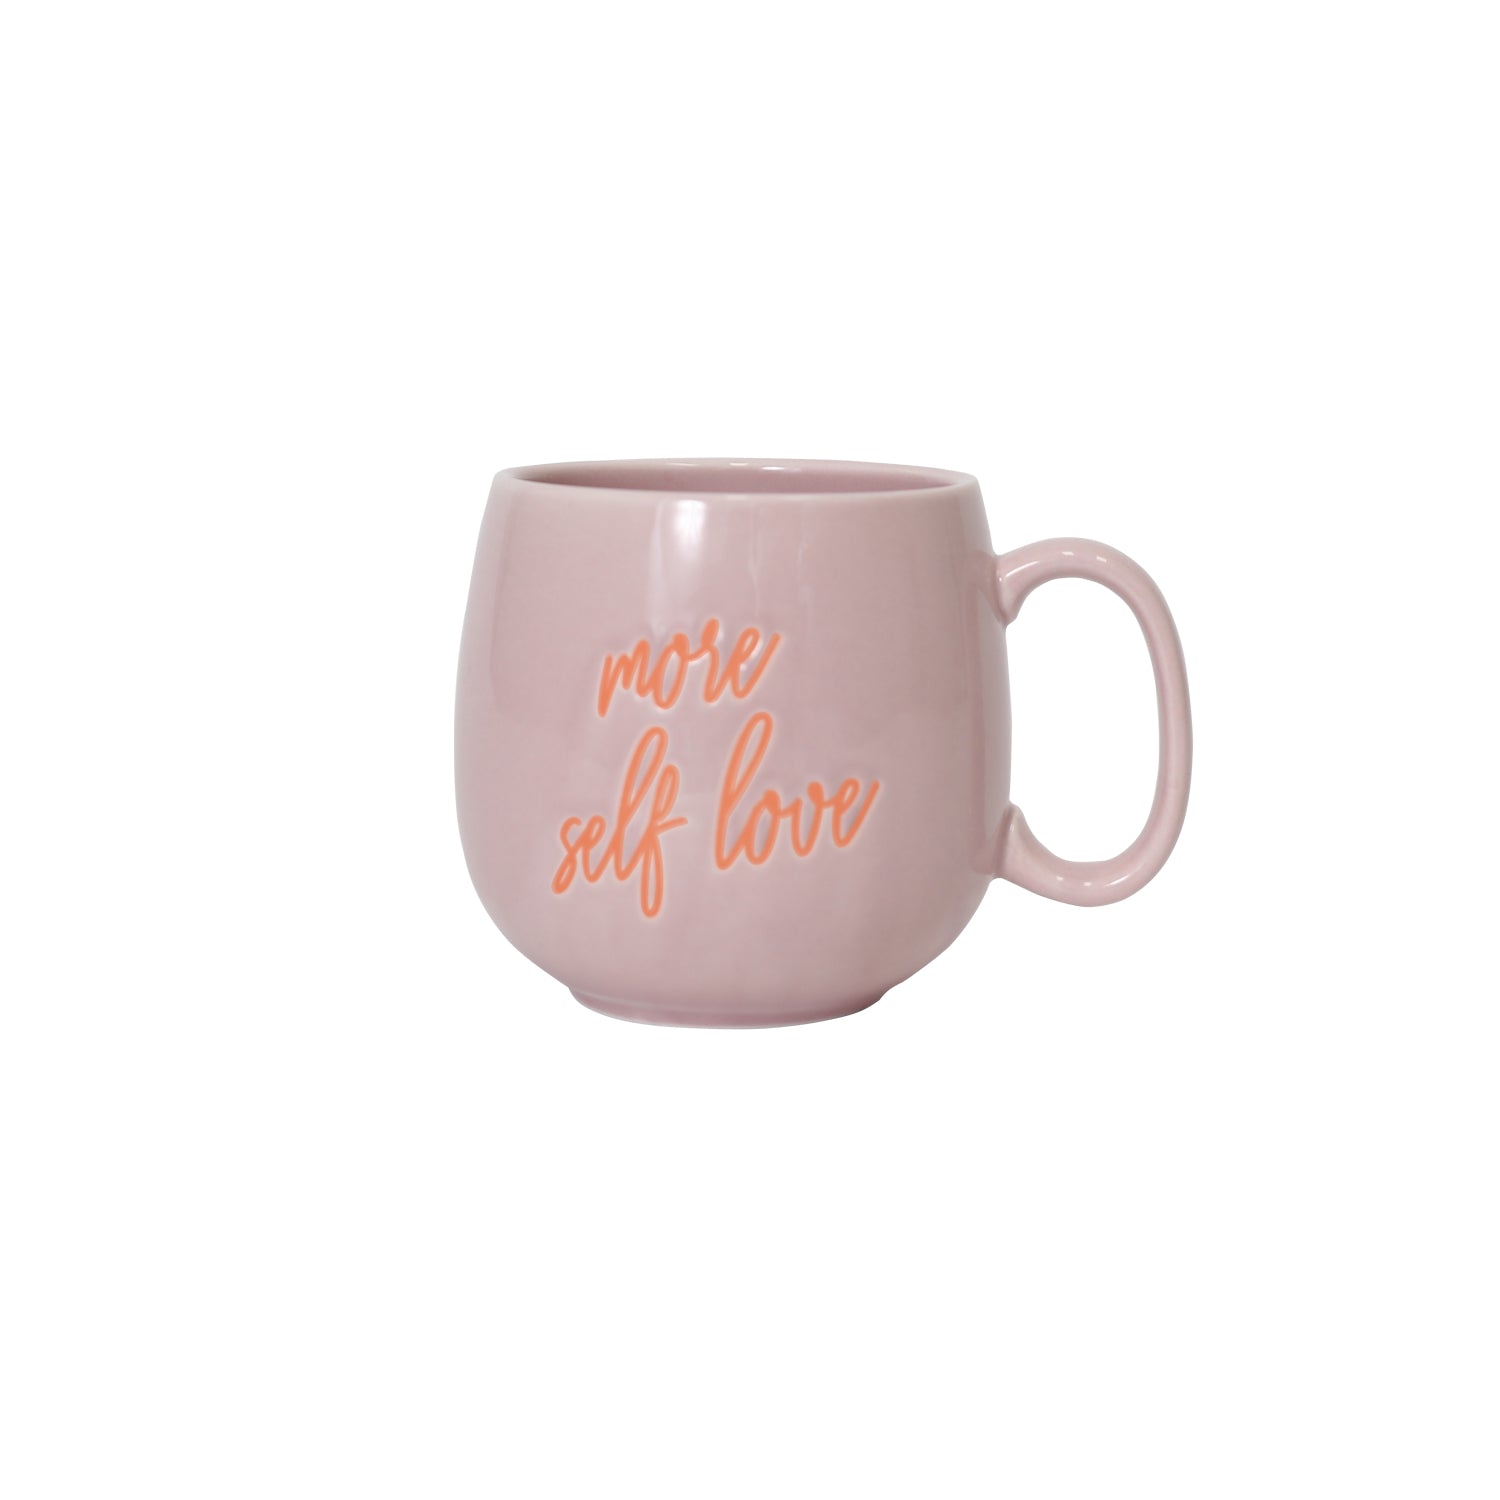 Splosh Colour Pop Mug - Self Love